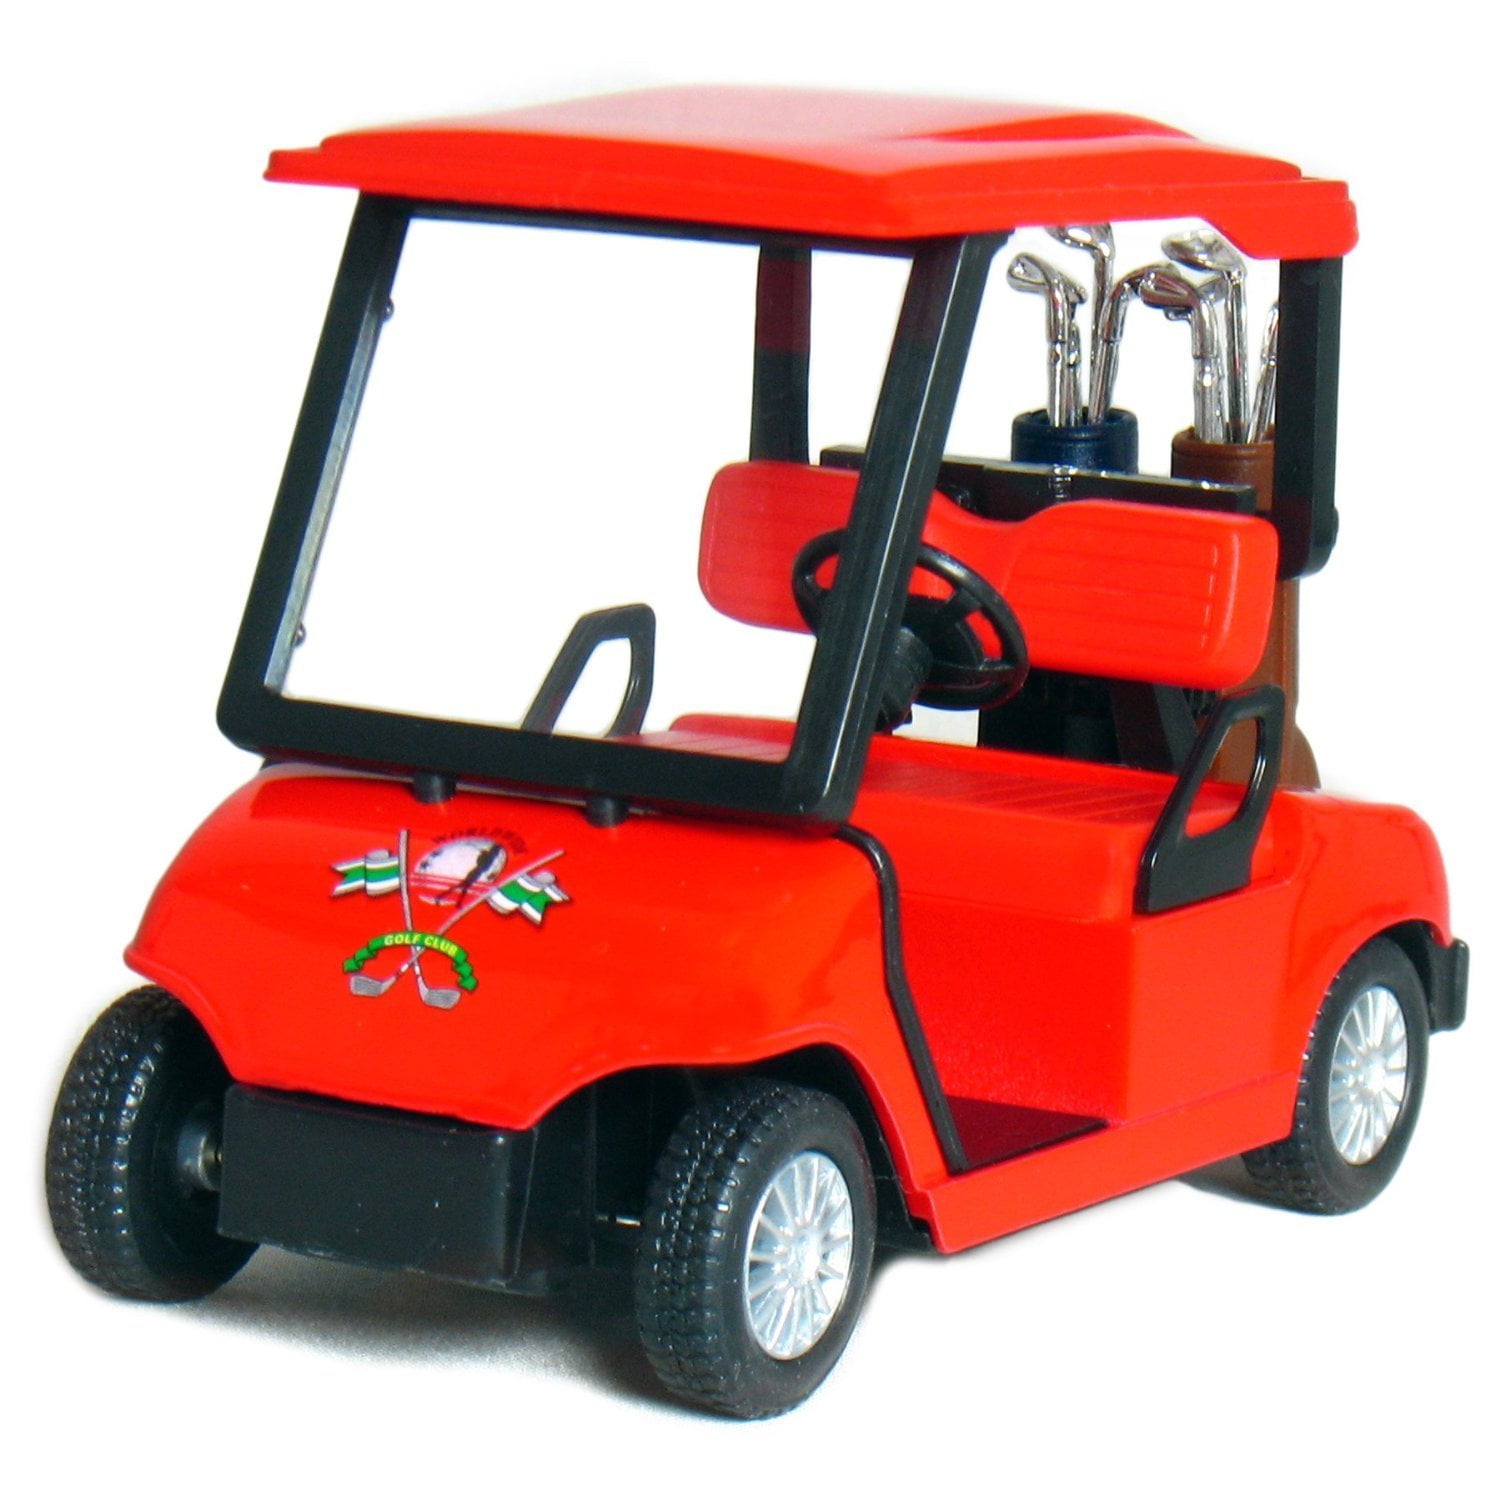 children's electric golf cart